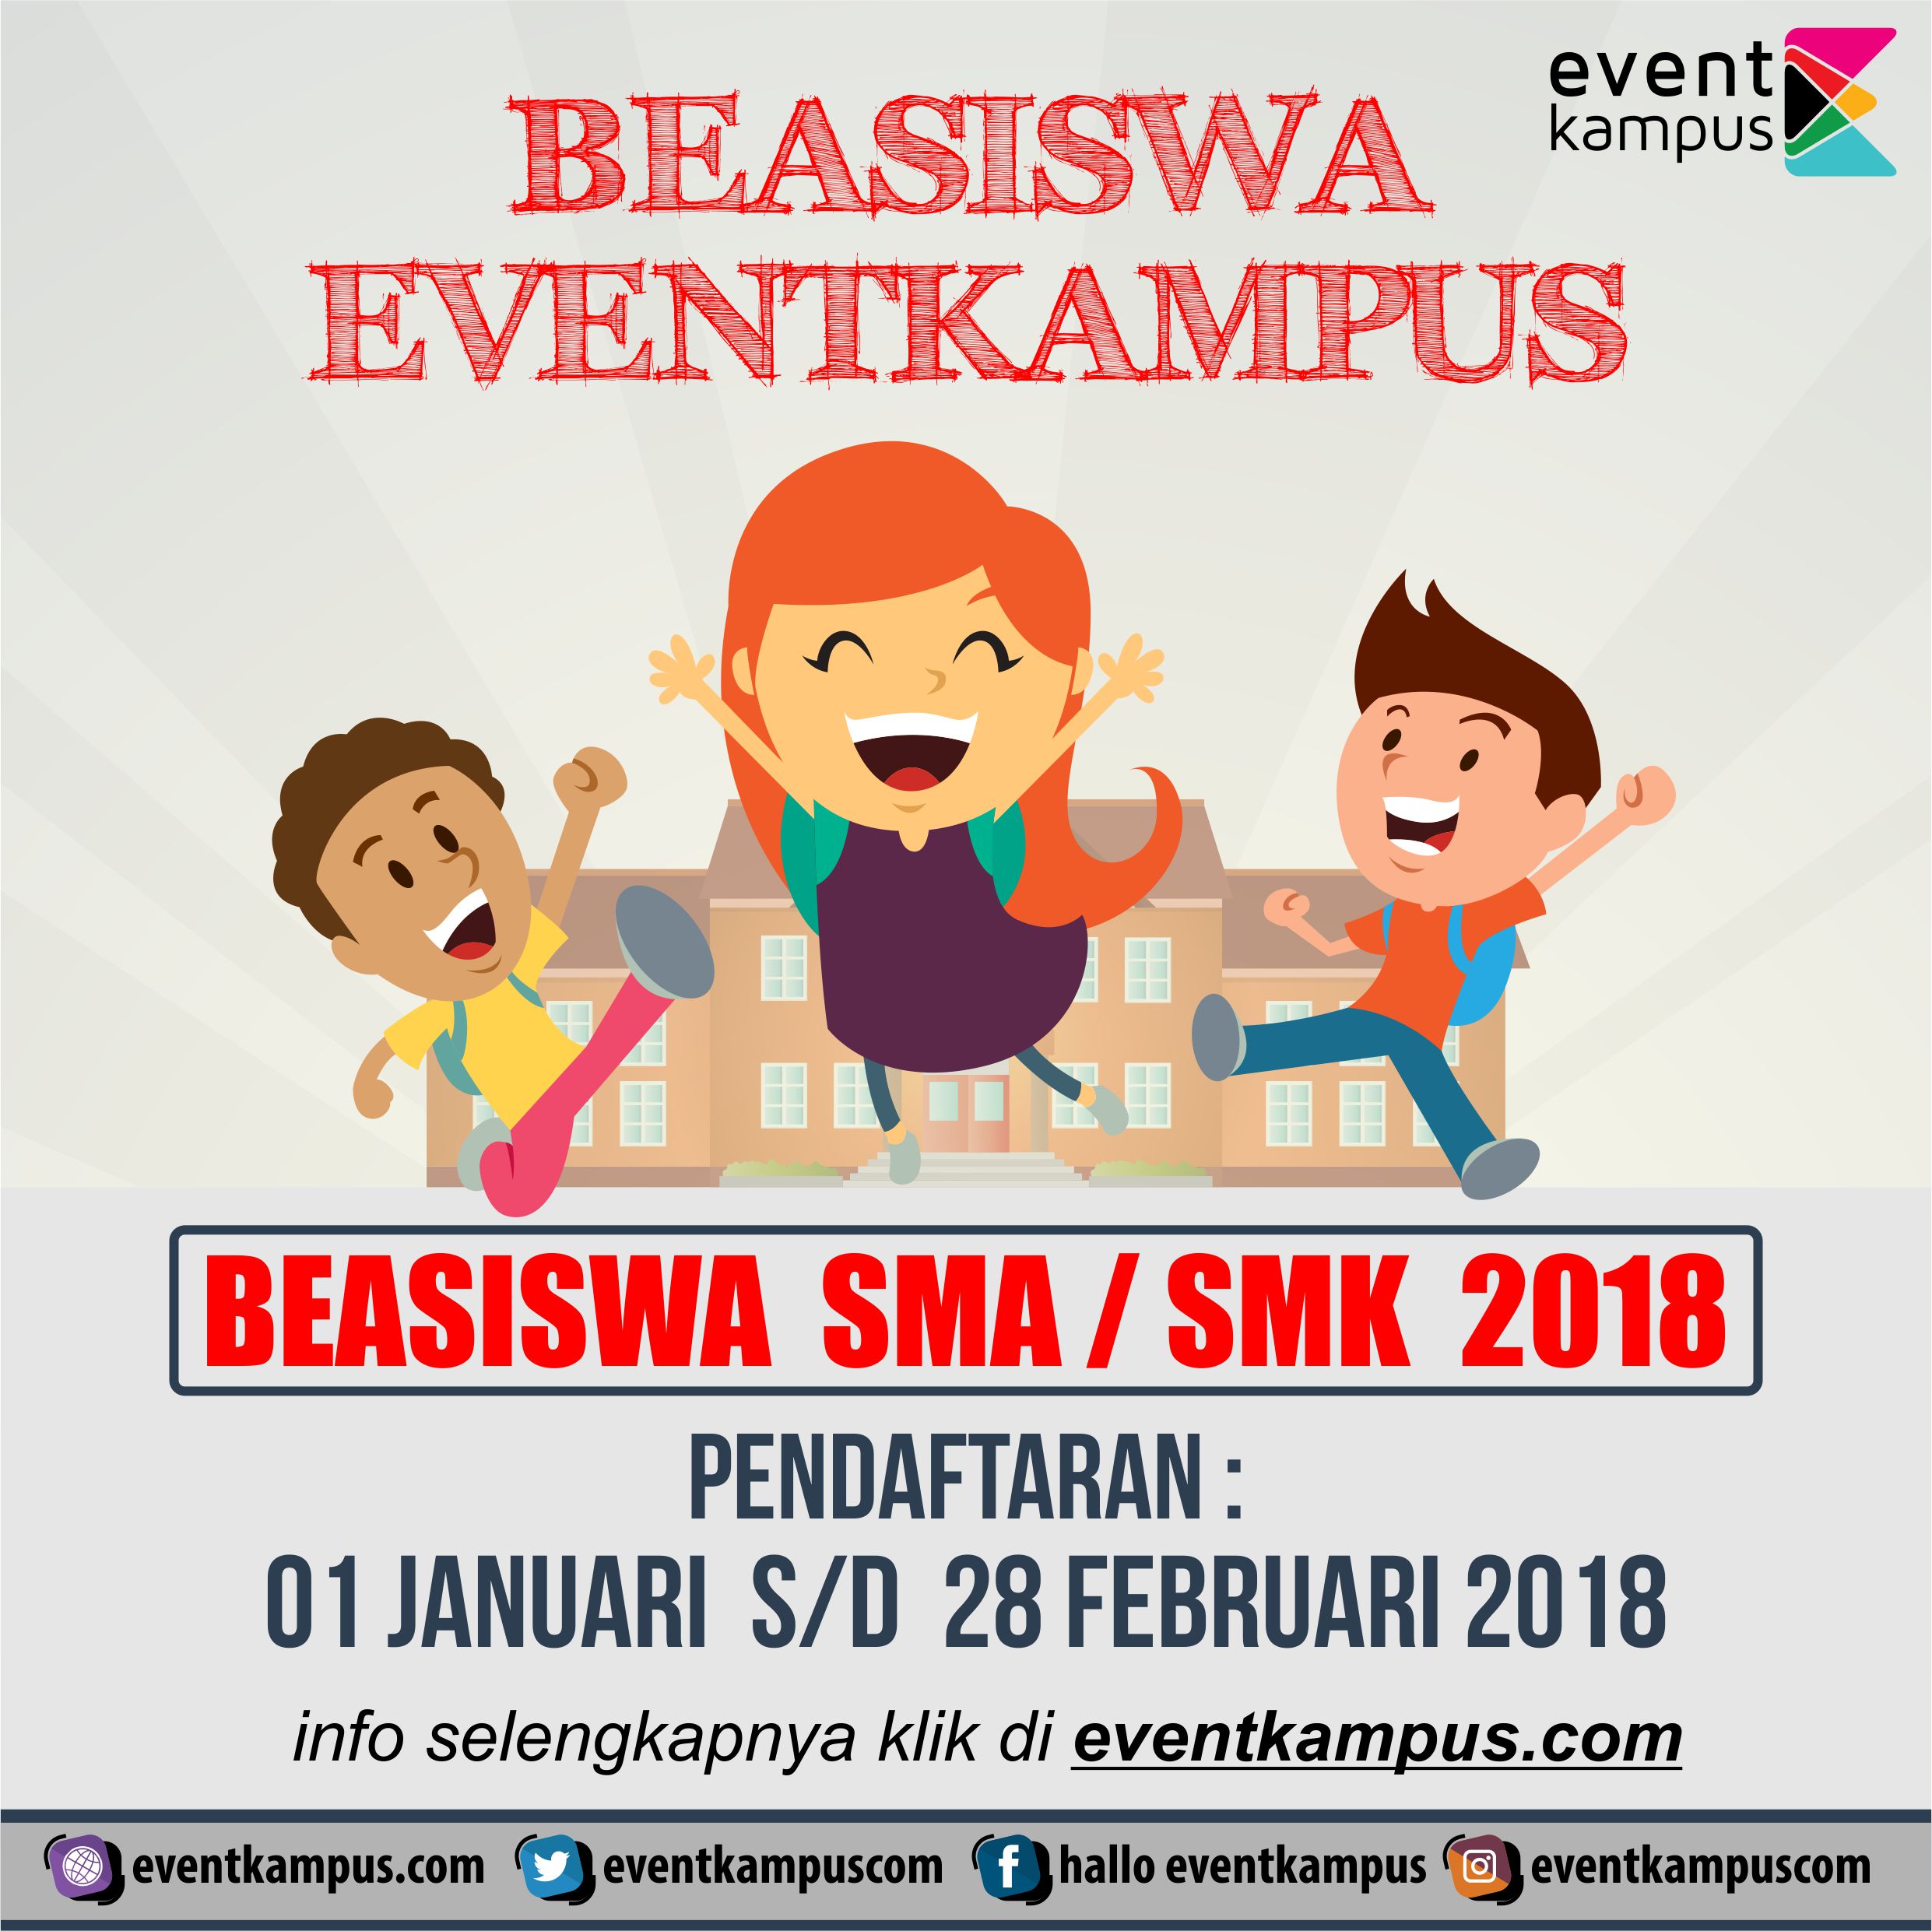 Beasiswa Sma/ Smk 2018 | Event - Eventkampus.com